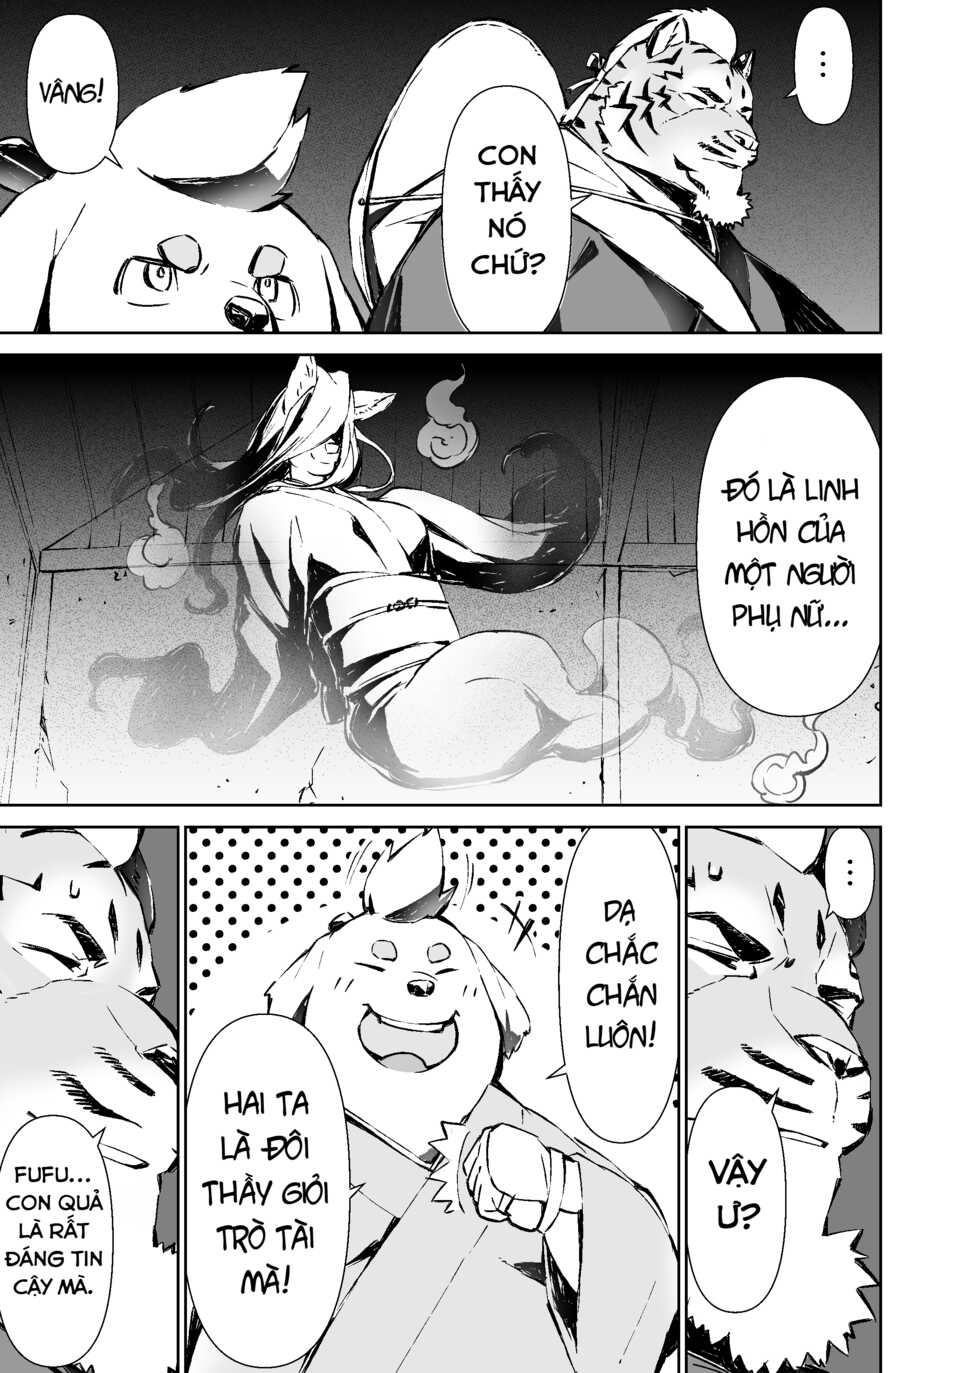 [Mennsuke] Manga Không Tên Của Mennsuke 1 - Hồi 1 - Page 3